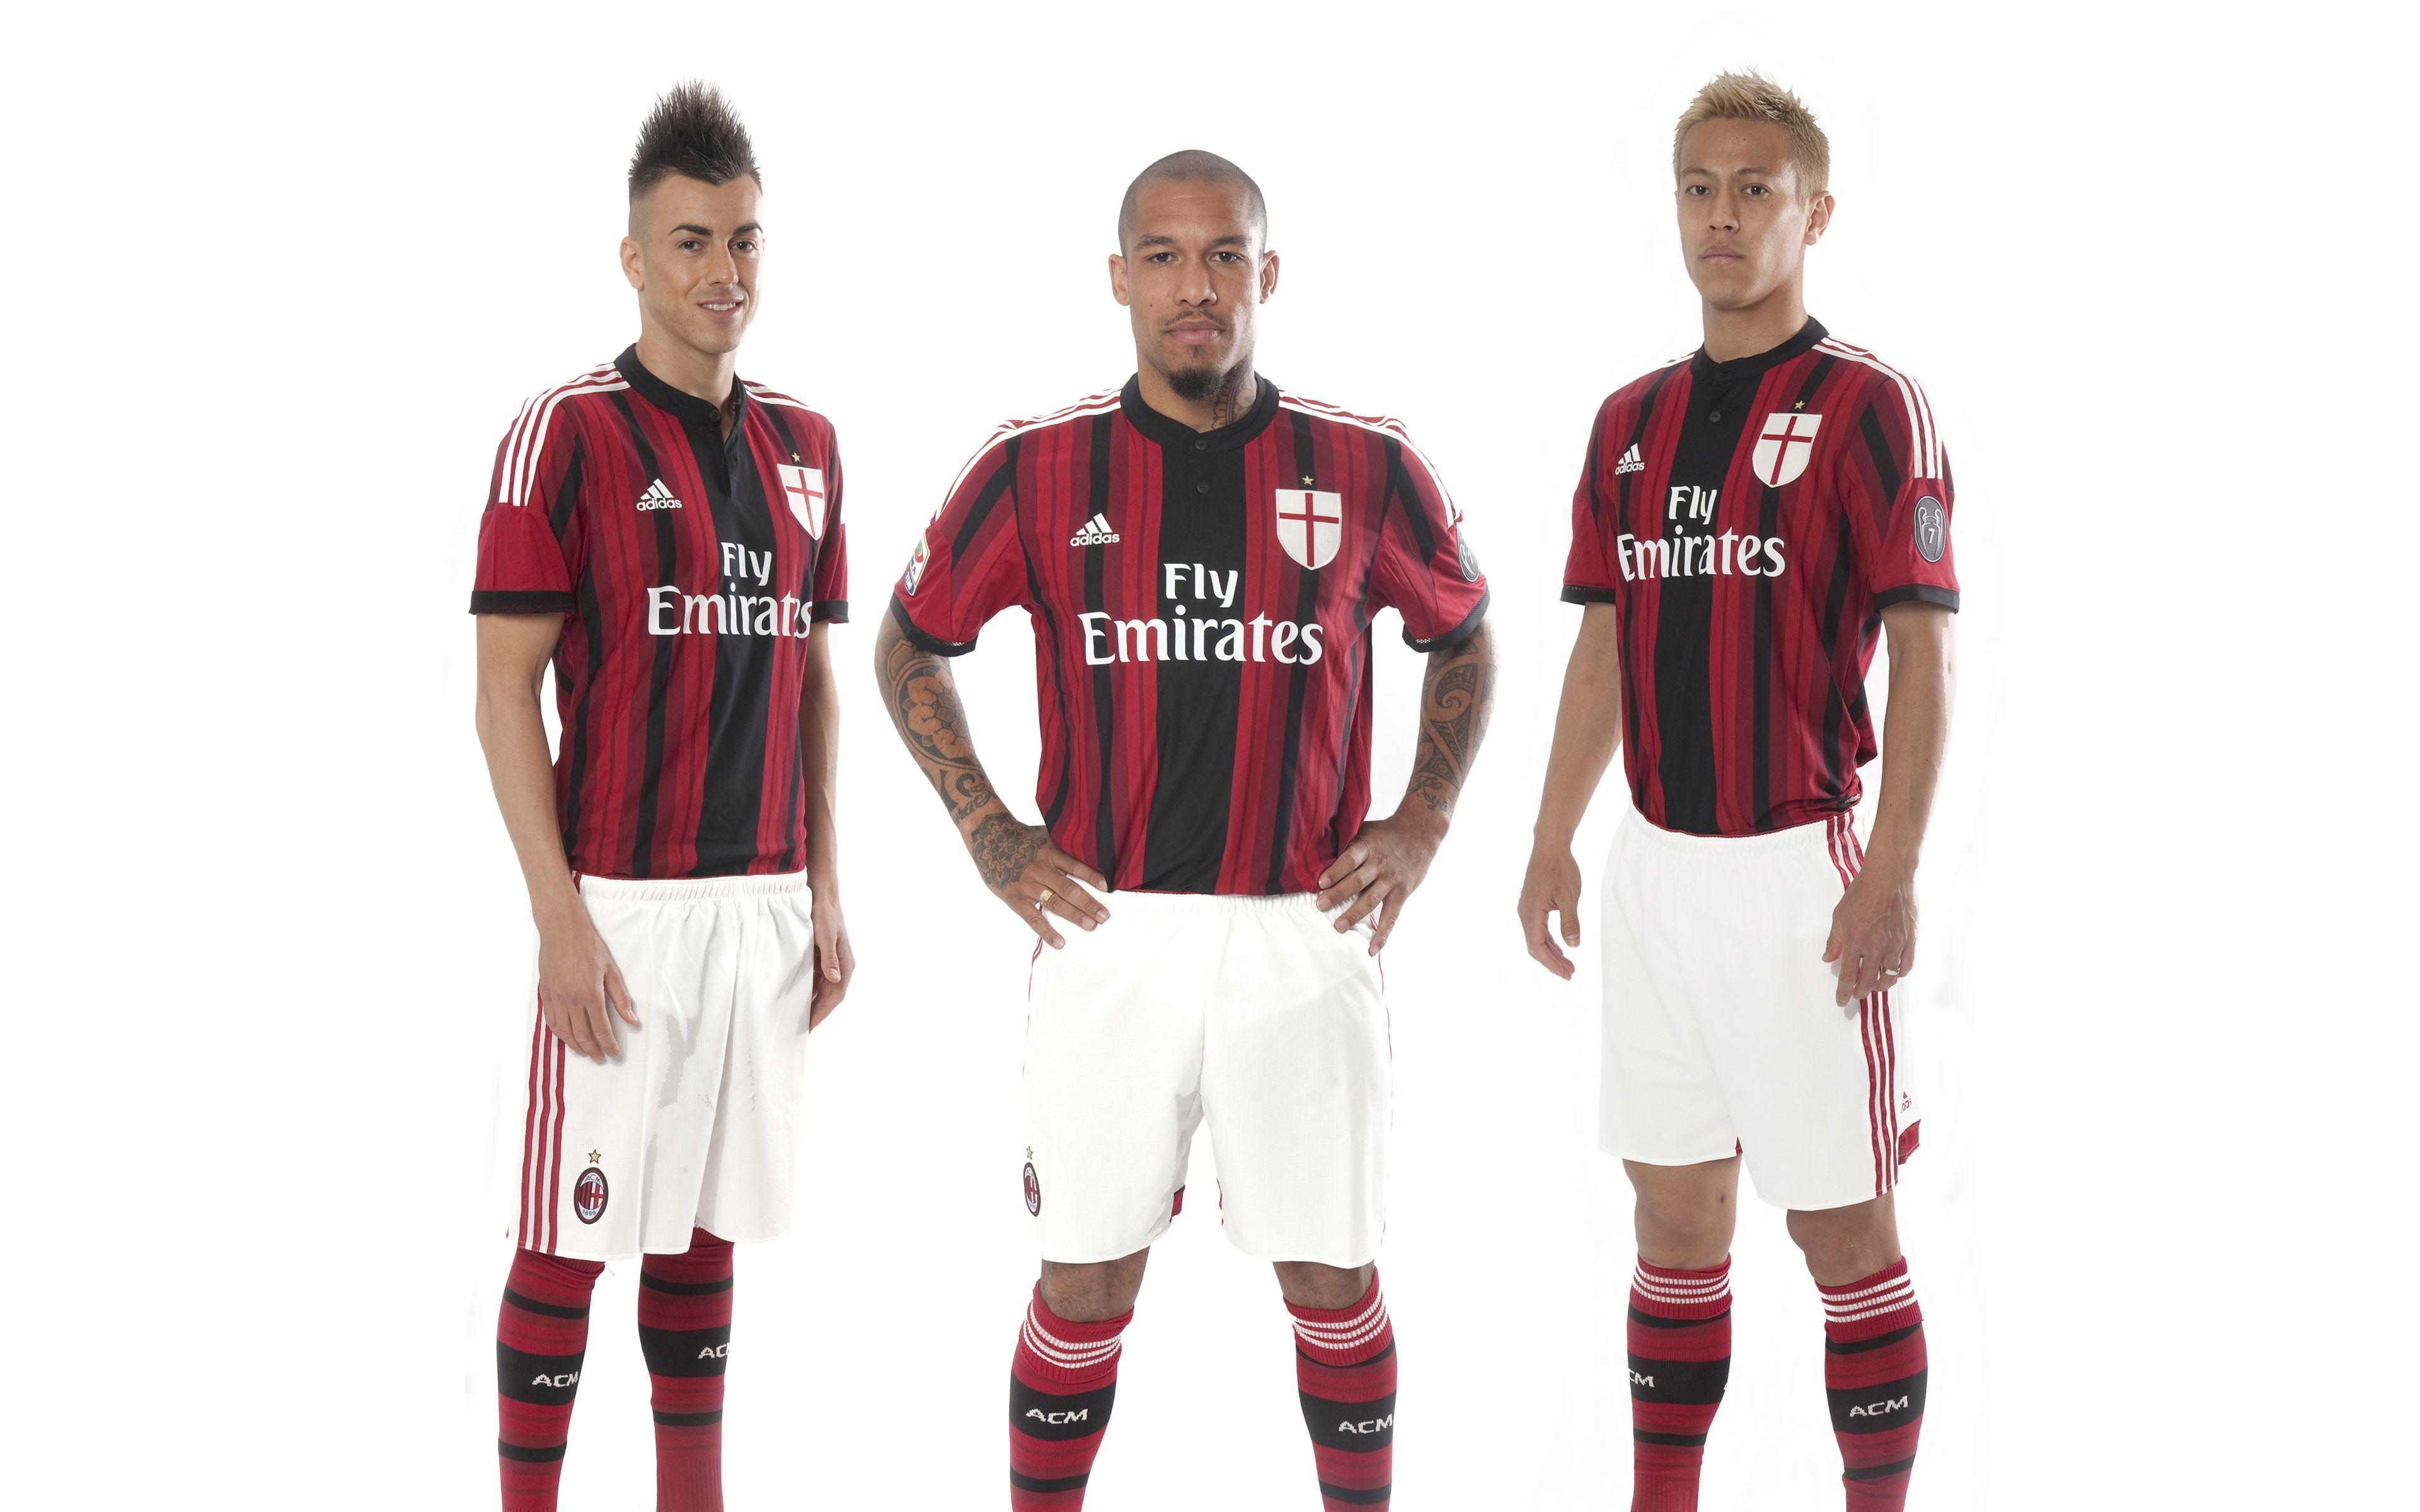 AC Milan 2014 2015 Adidas Home Kit Jersey Wallpaper Wide Or HD